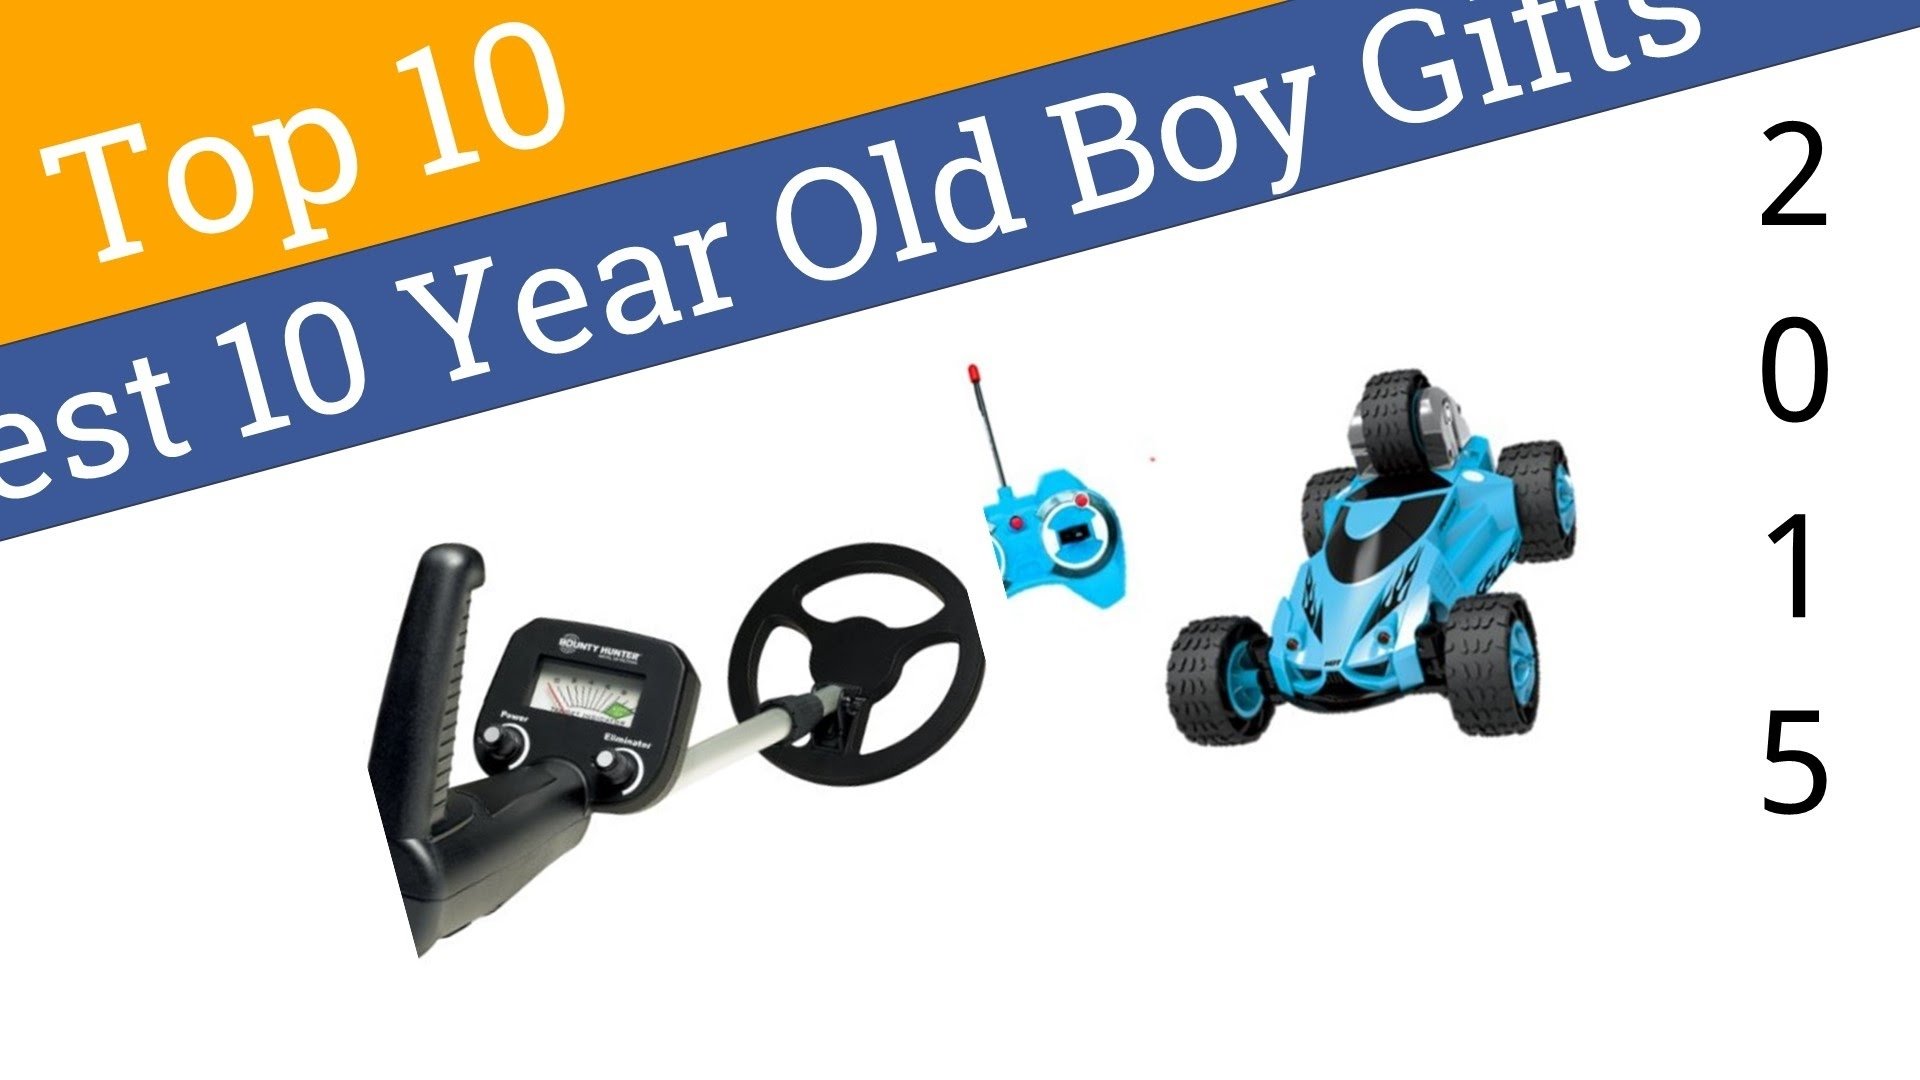 10 Pretty Gift Ideas 10 Year Old Boy 10 best 10 year old boy gifts 2015 youtube 3 2022